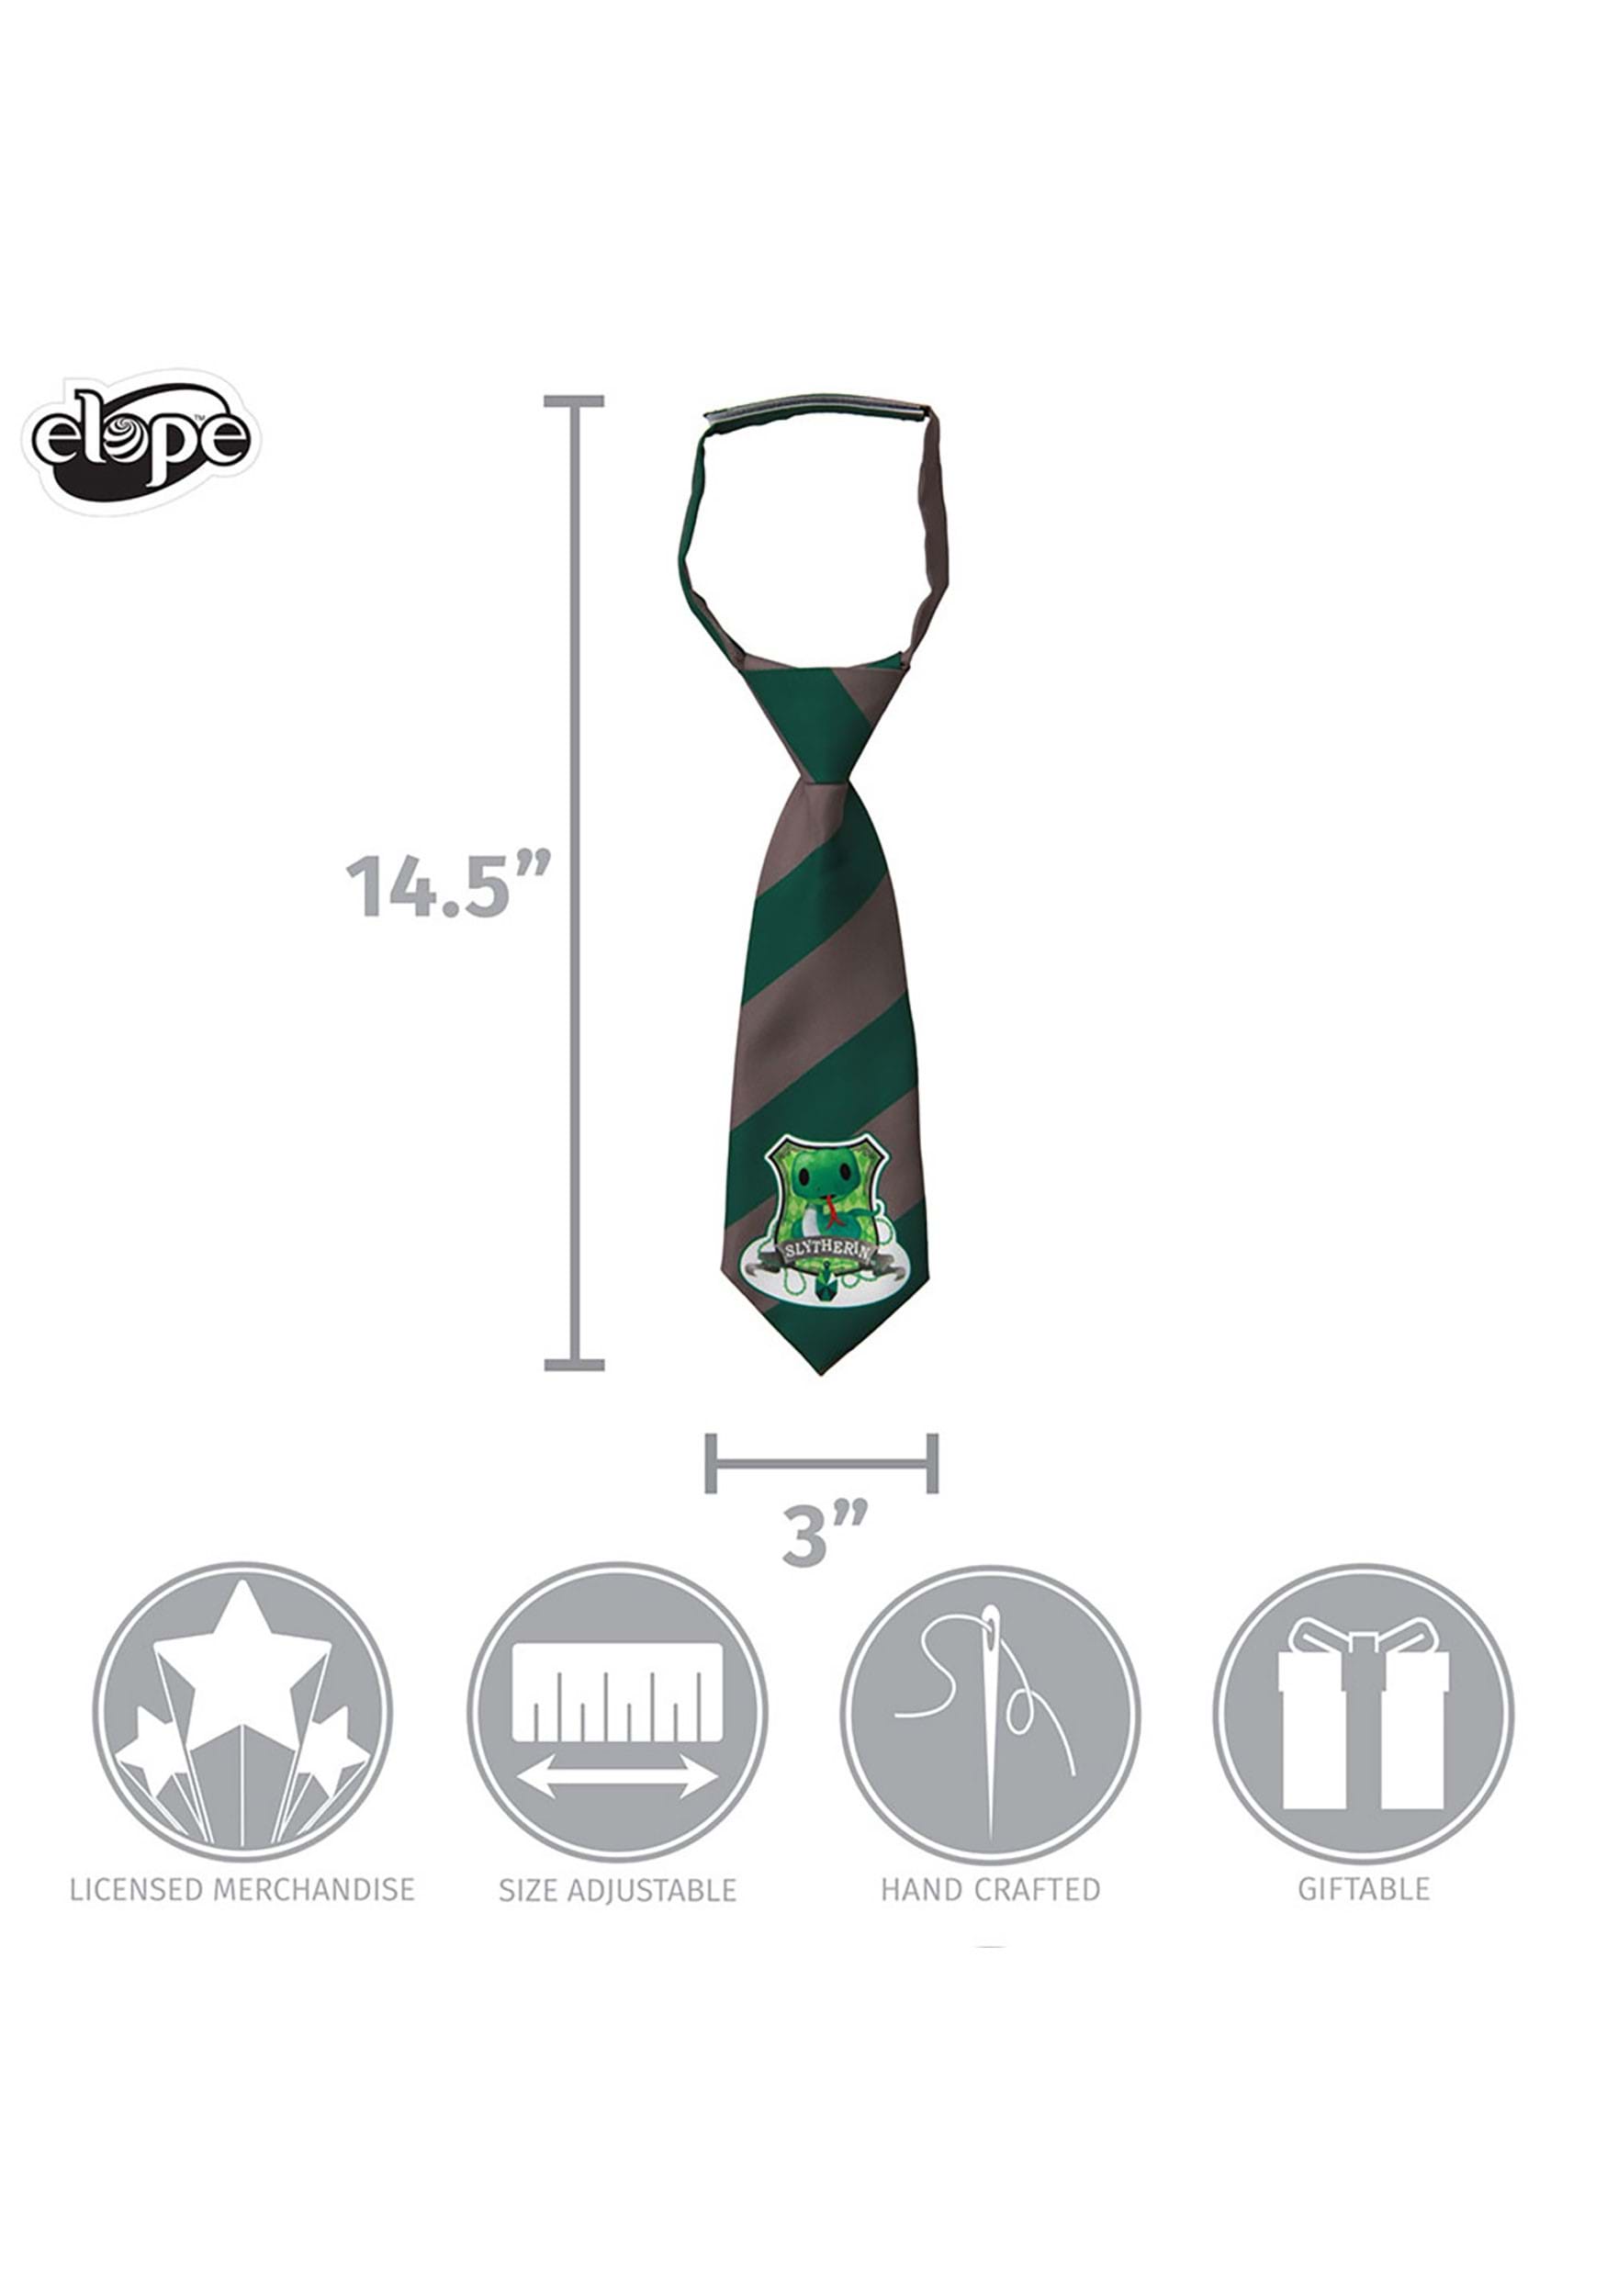 Harry Potter Costume Necktie, Official Hogwarts Wizarding World Kids  Costume Breakaway Child Size Tie